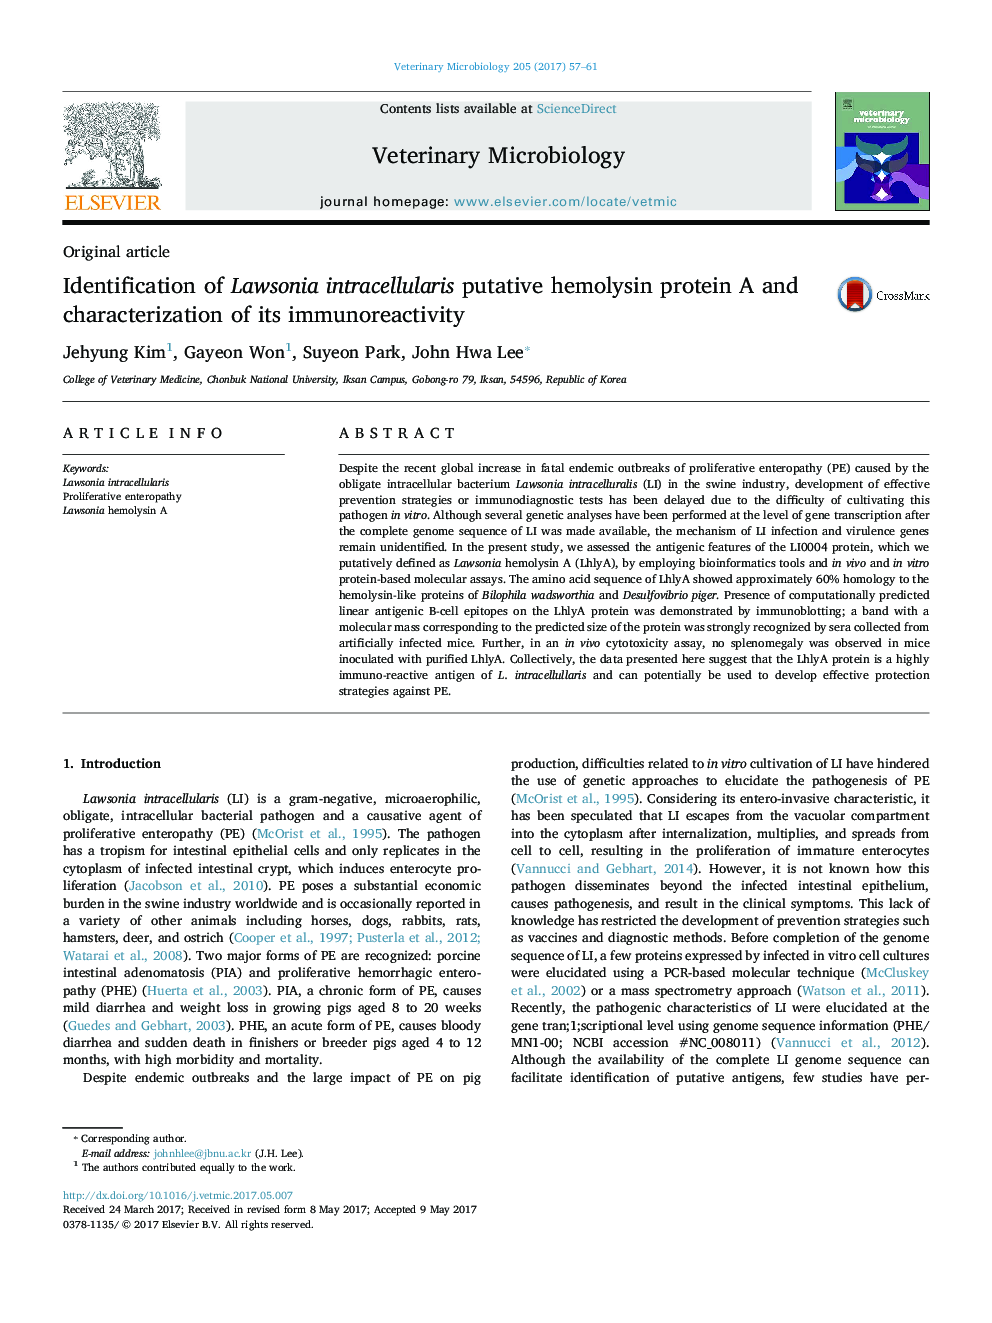 Identification of Lawsonia intracellularis putative hemolysin protein A and characterization of its immunoreactivity